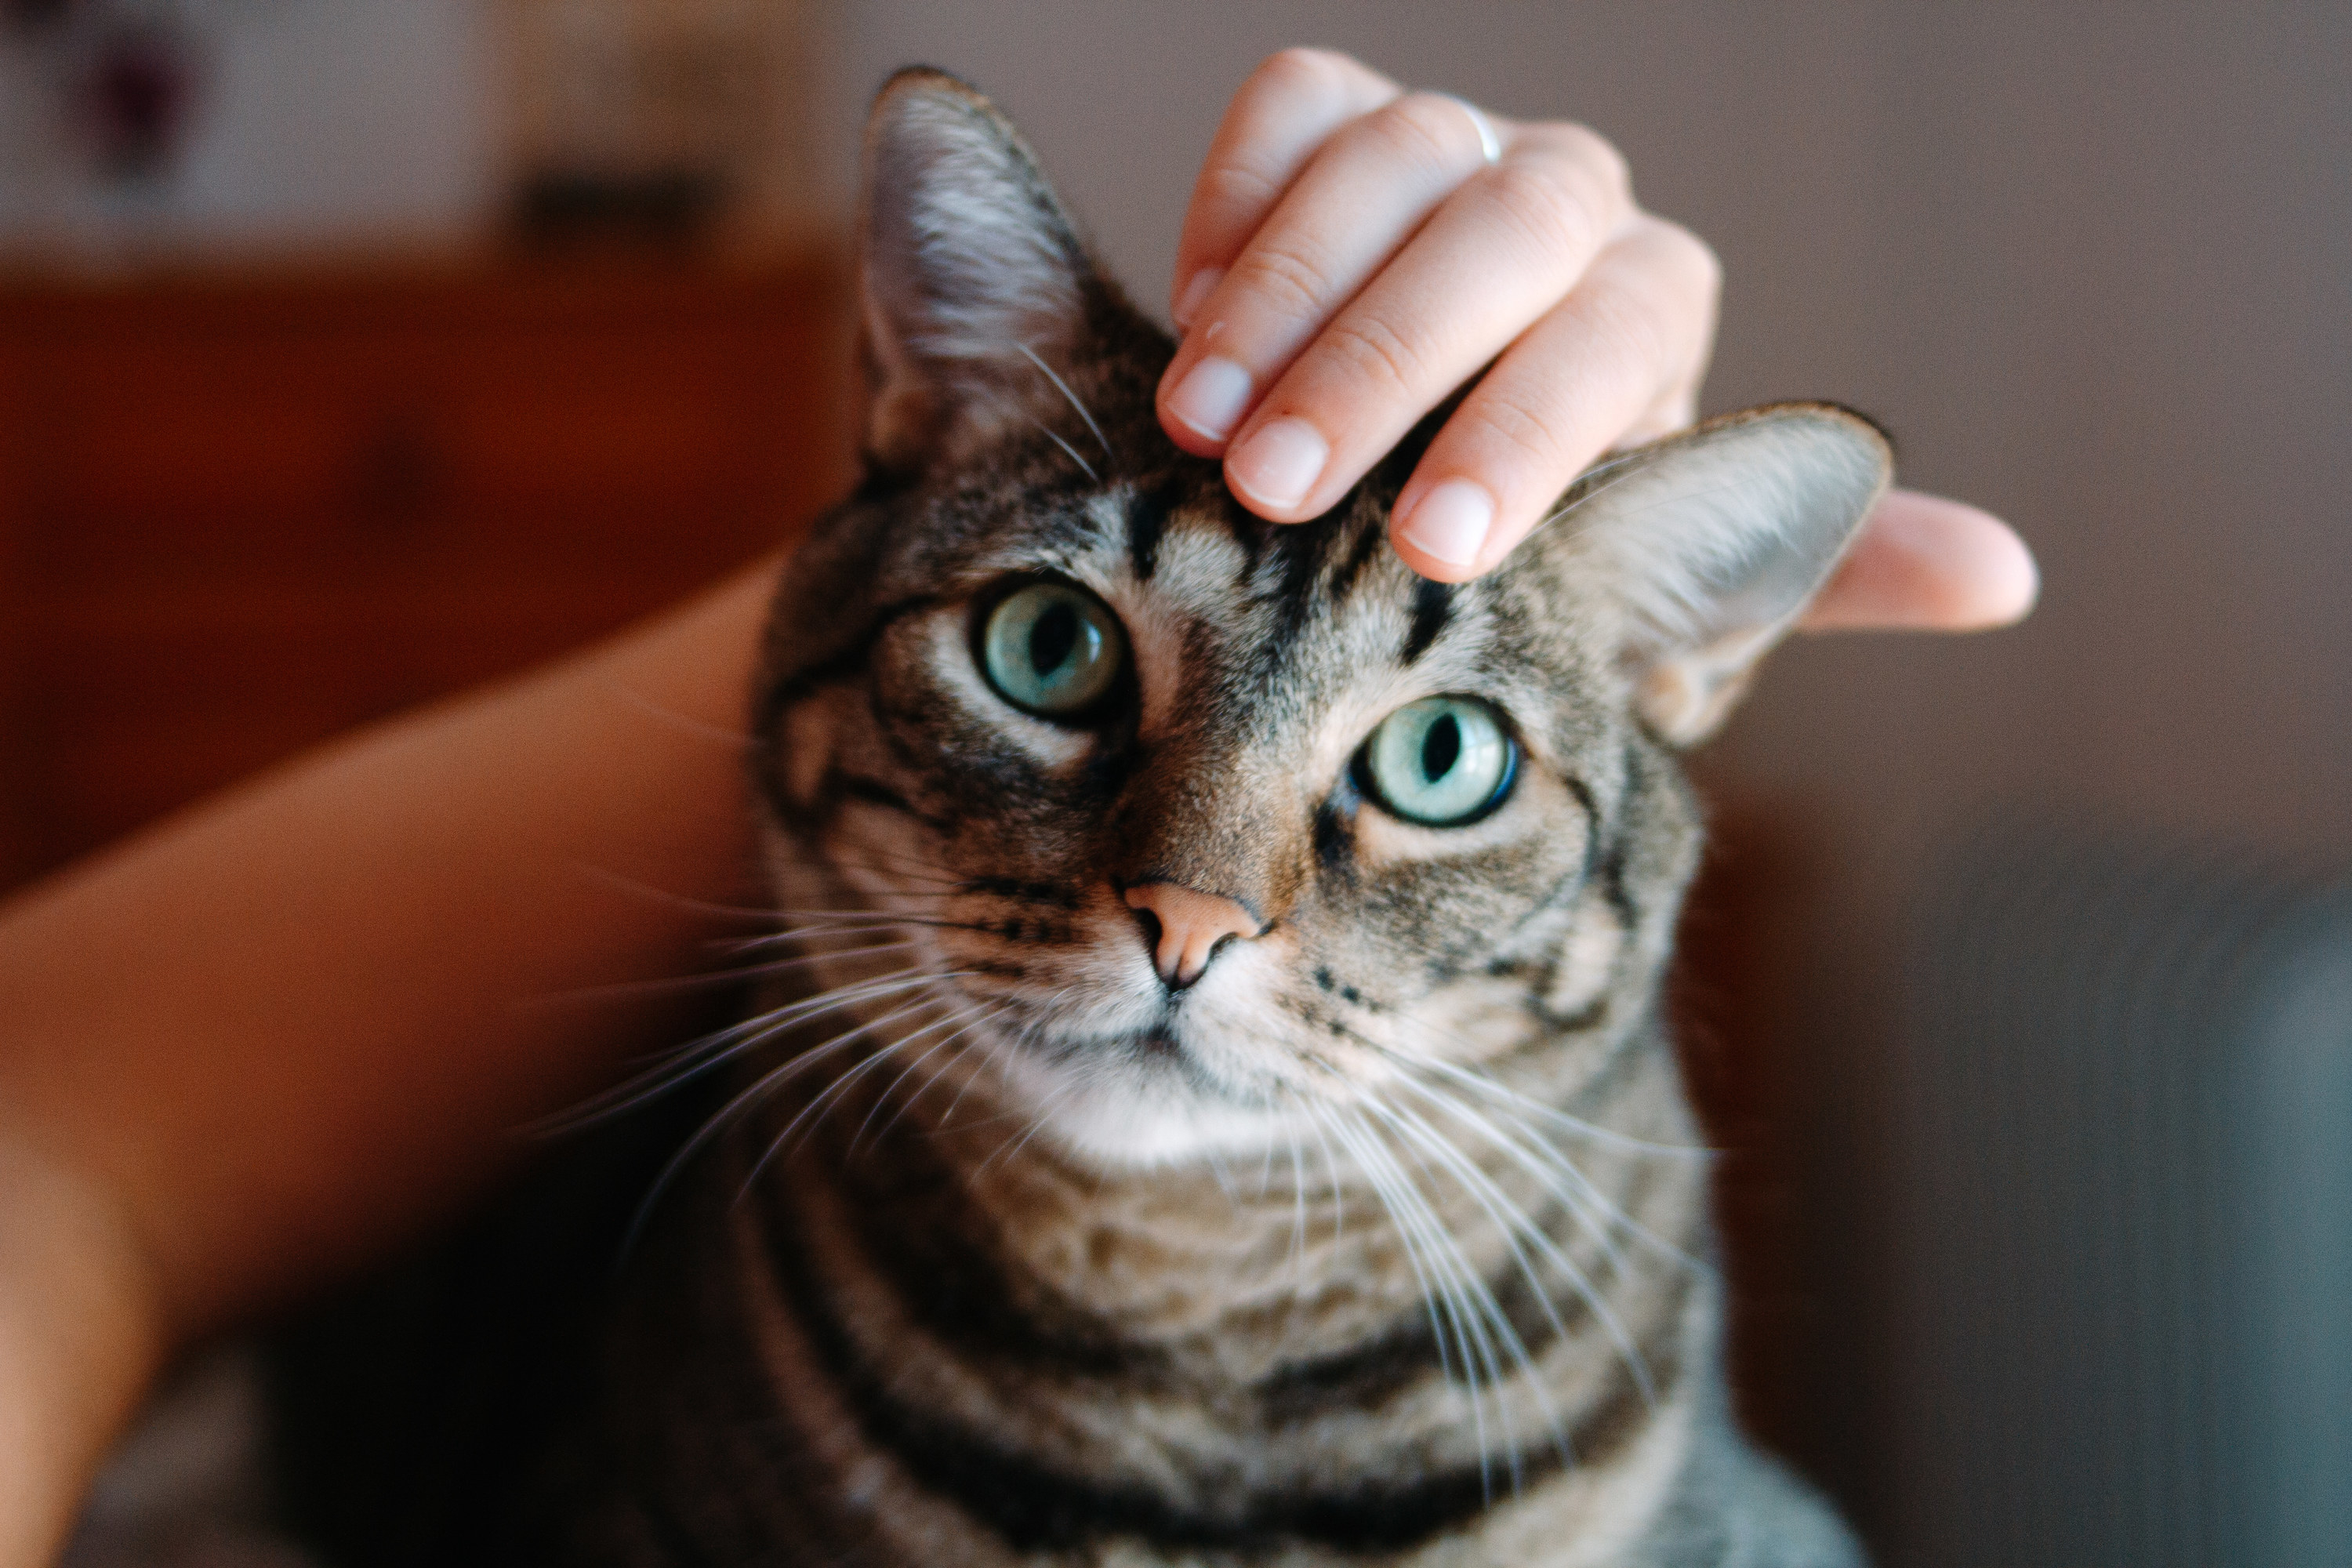 a hand pets a tabby cat